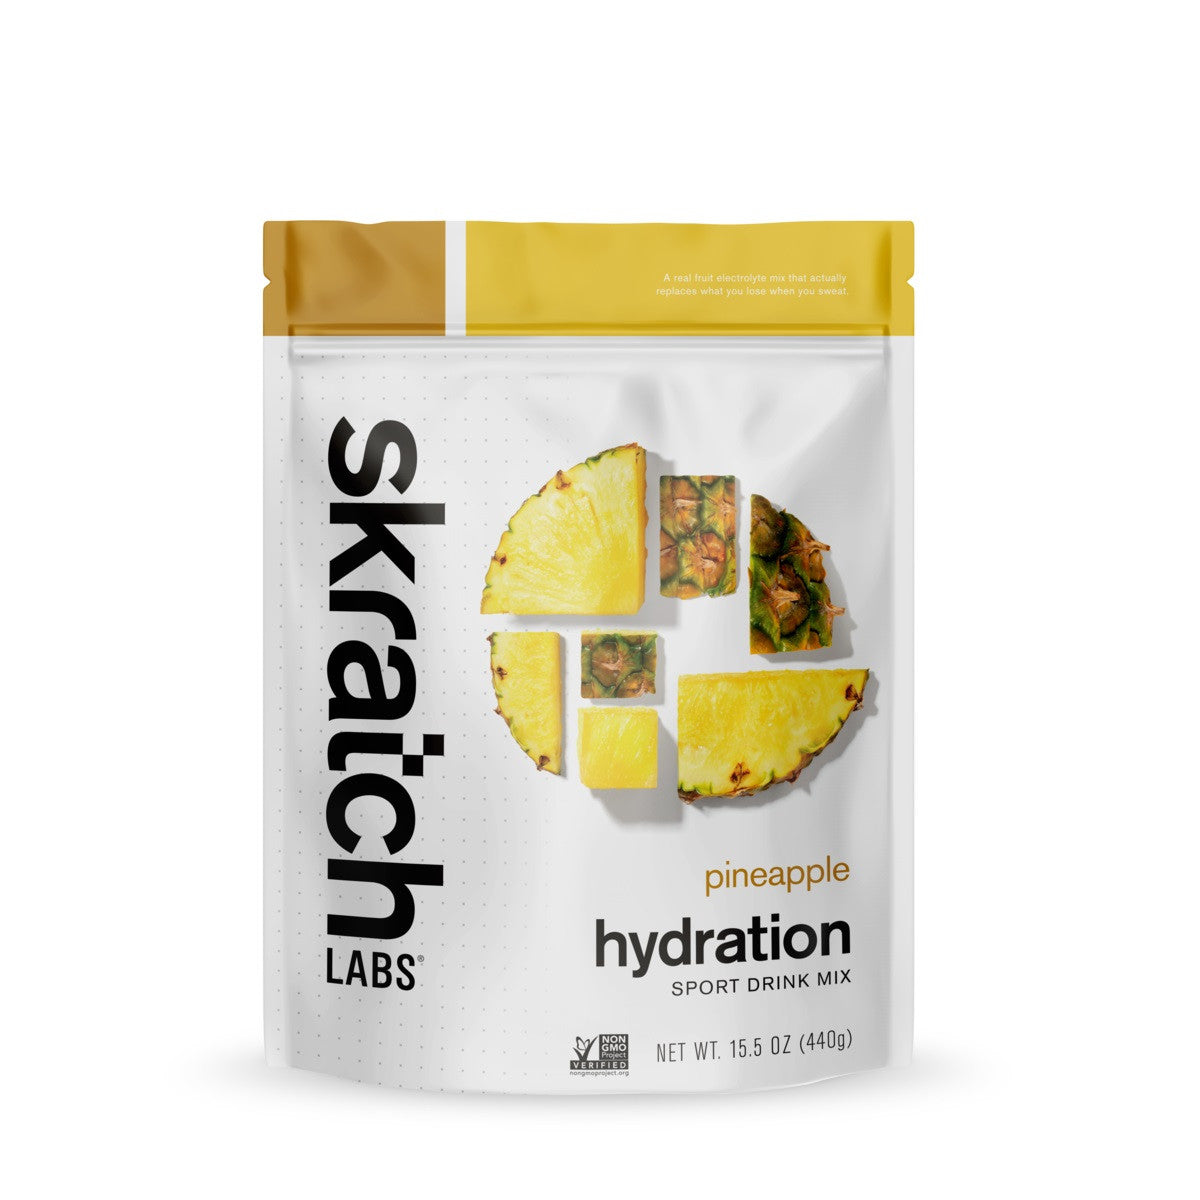 SKRATCH LABS Sport Hydration Drink Mix 1Lbs Bag (440g)